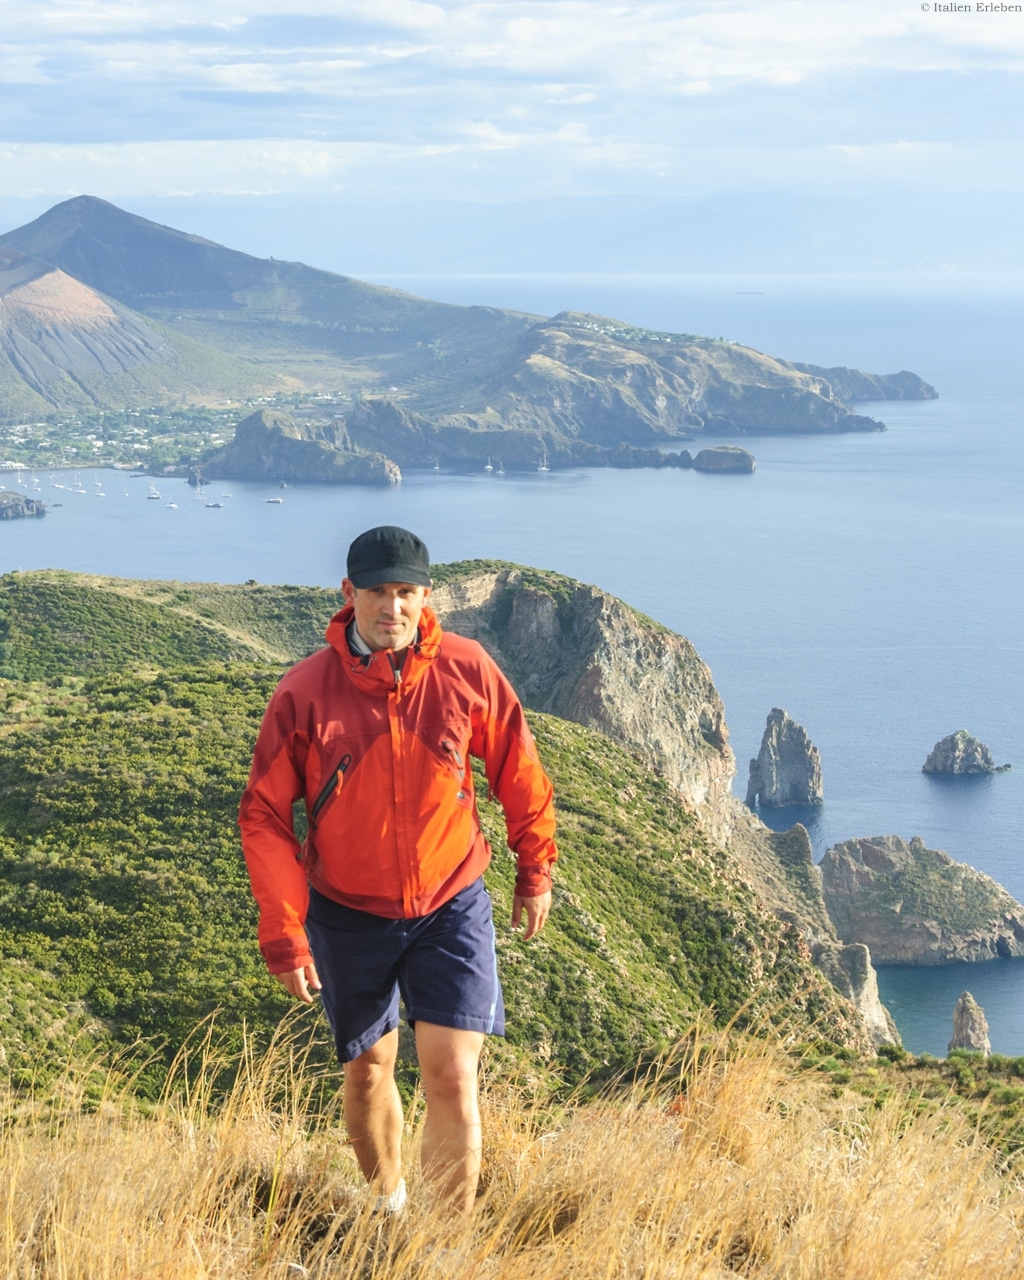 Sizilien Äolische Inseln wandern rote Jacke Meer Küste Berg